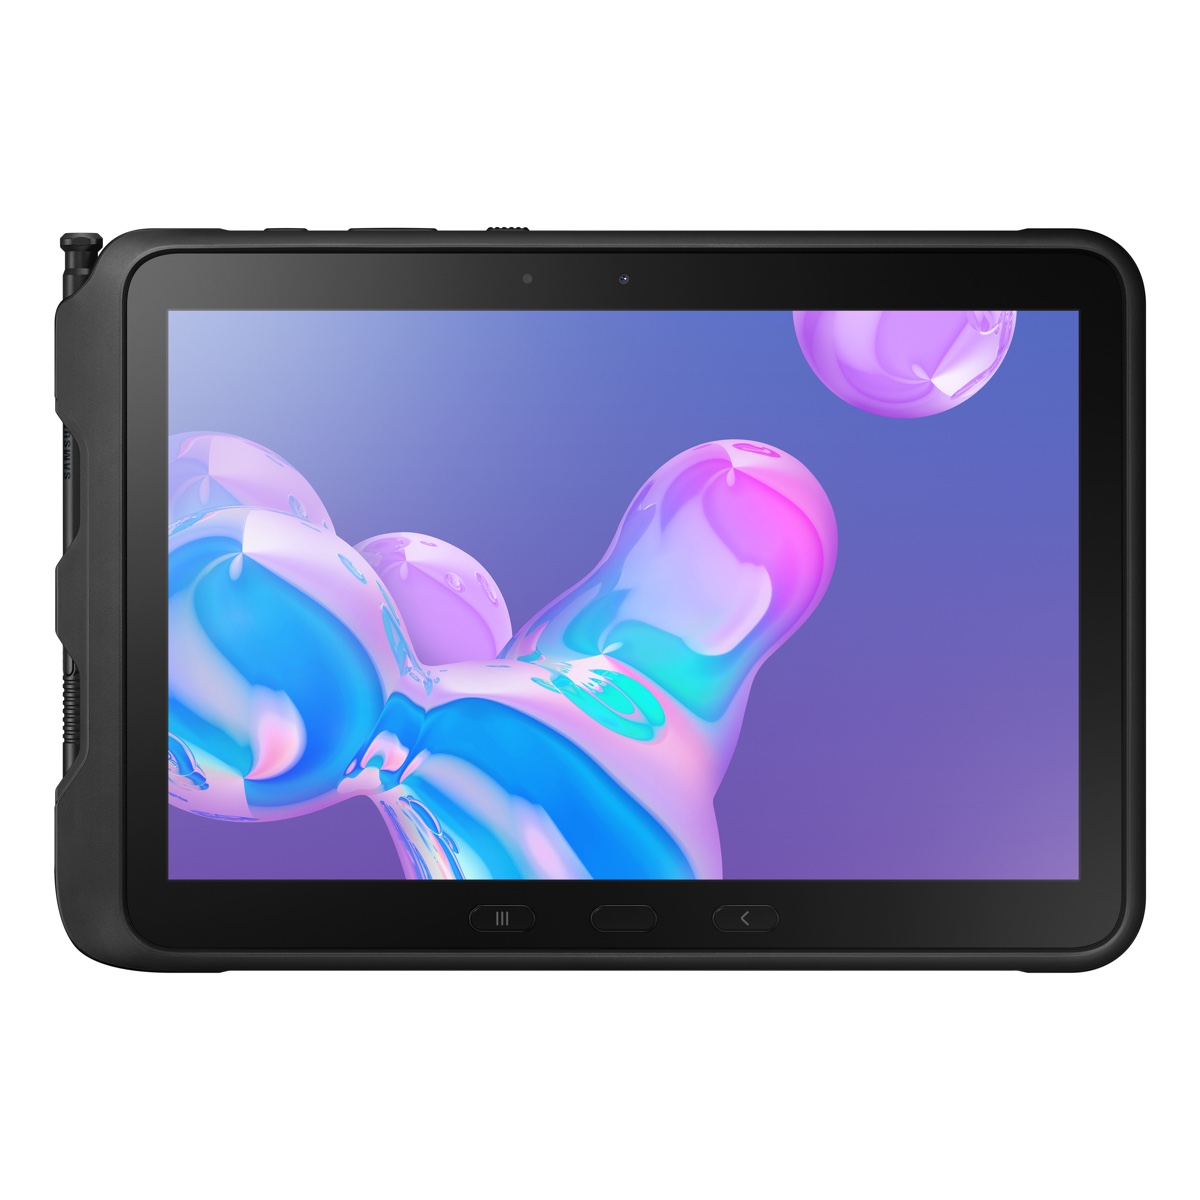 SM-T547UZKAXAA, Galaxy Tab Active Pro 10.1 (Unlocked)